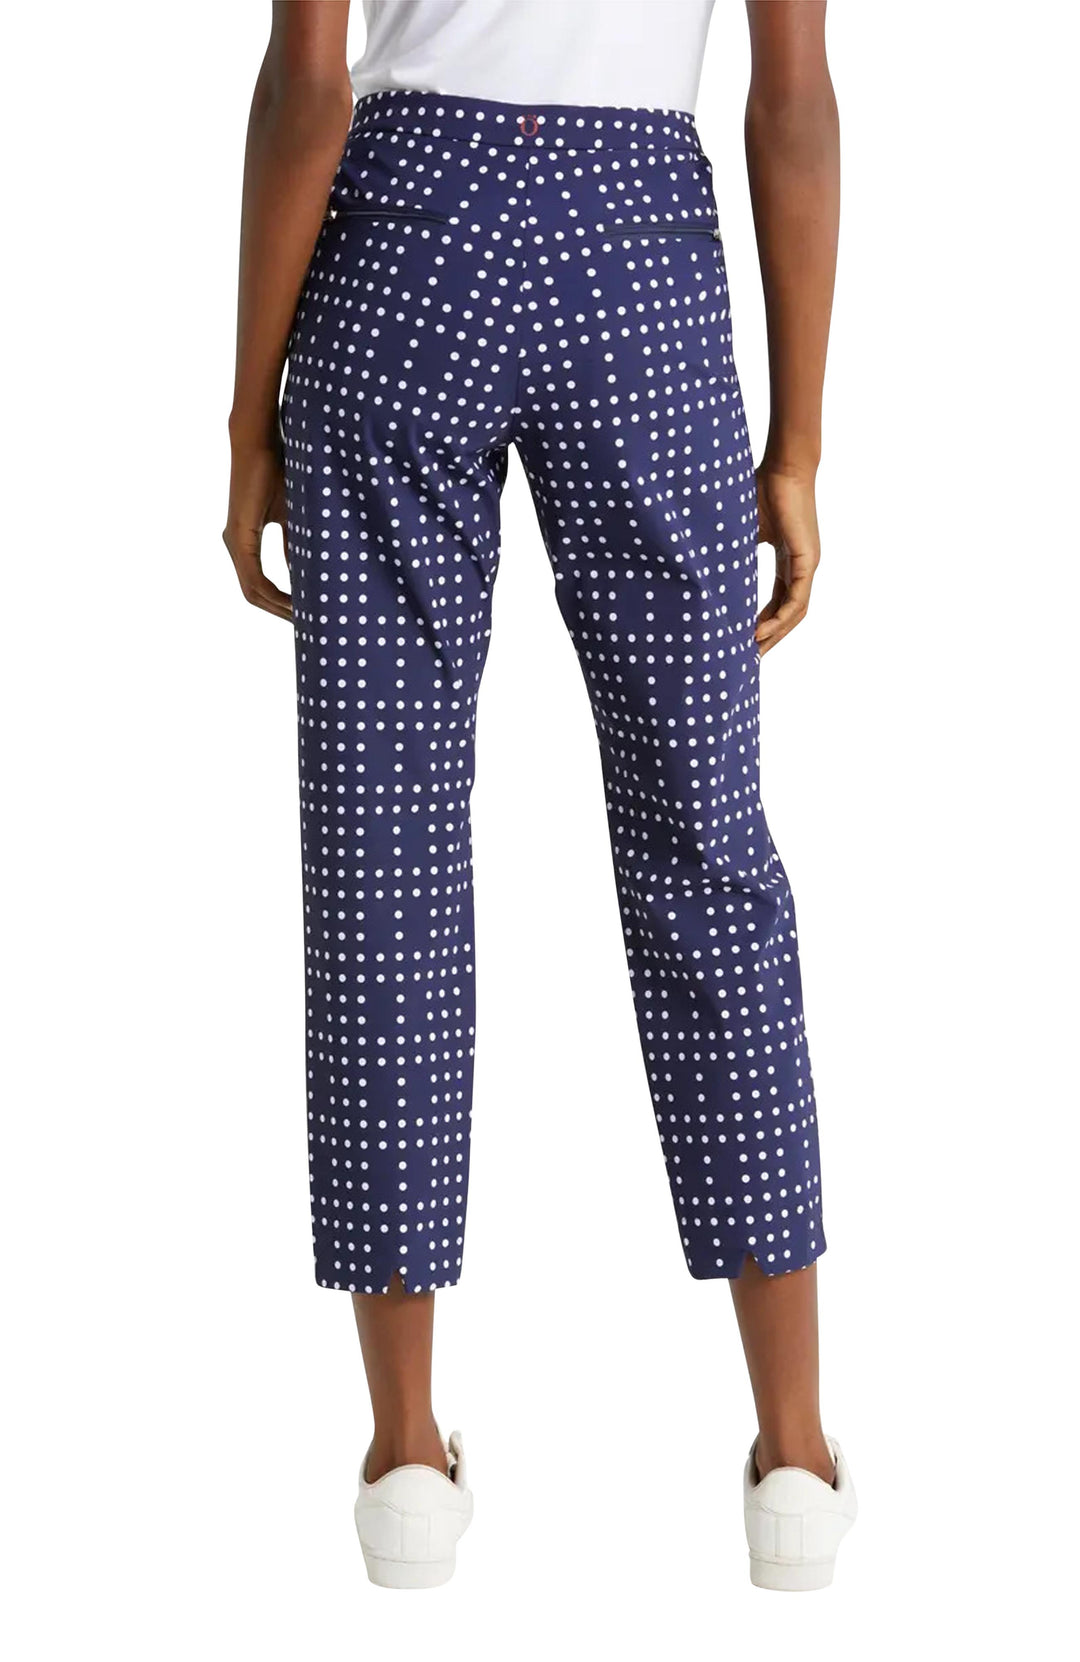 Back view of woman wearing navy polka dot crop golf pants